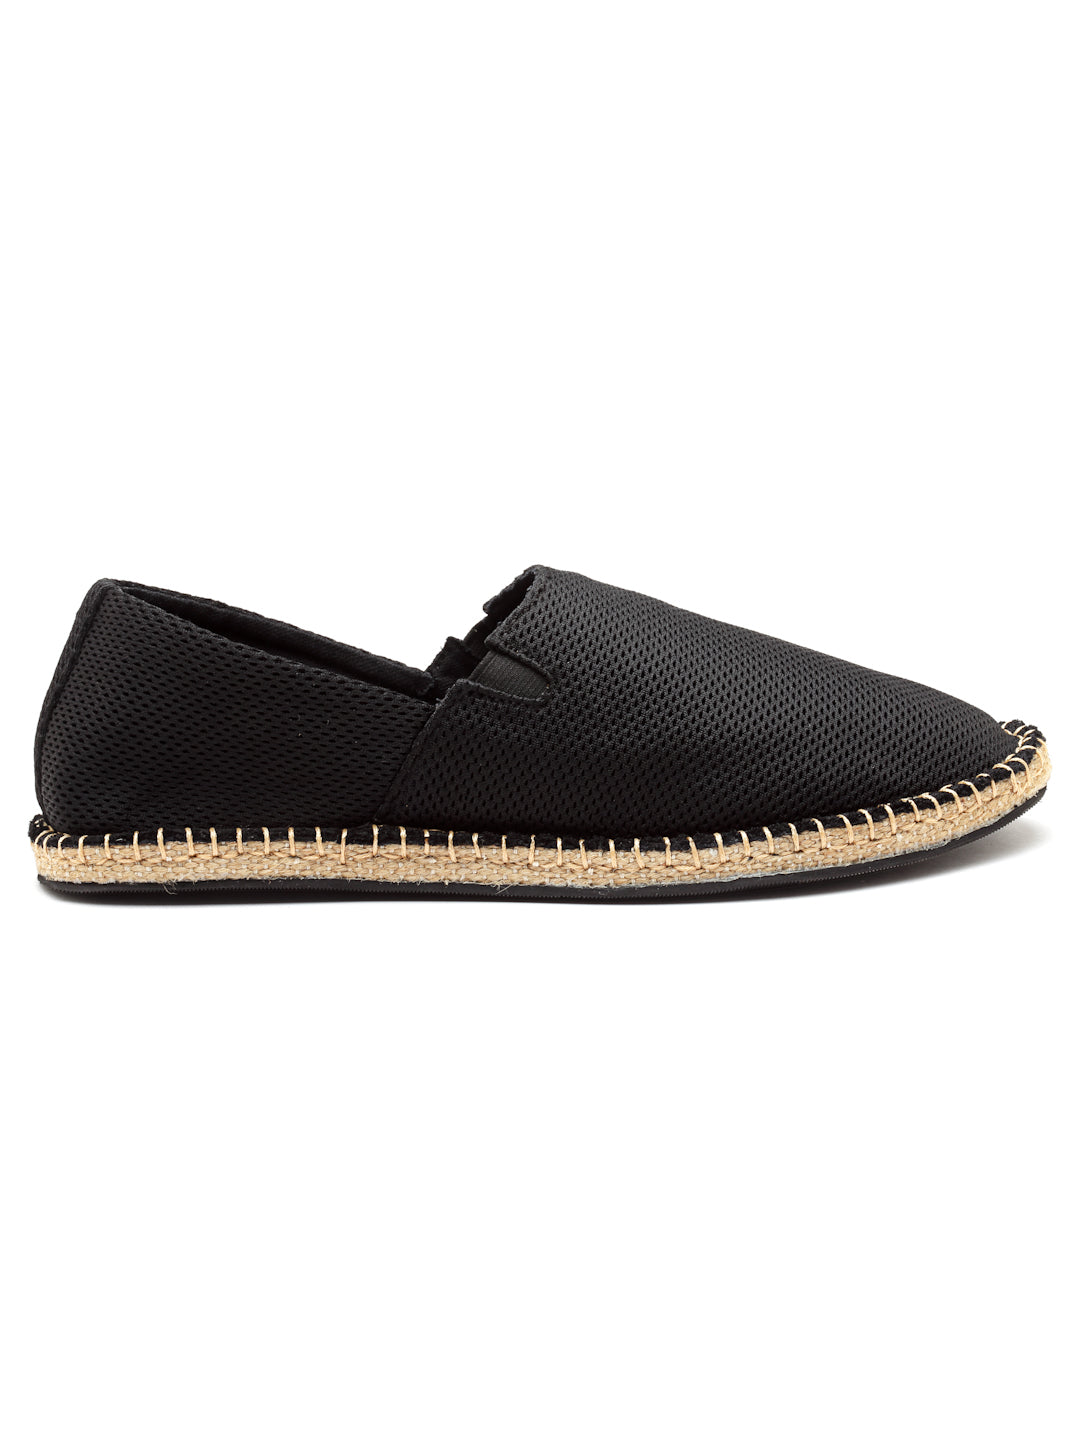 Black Textile Comfortable Slip On Casual Shoes | Espadrilles